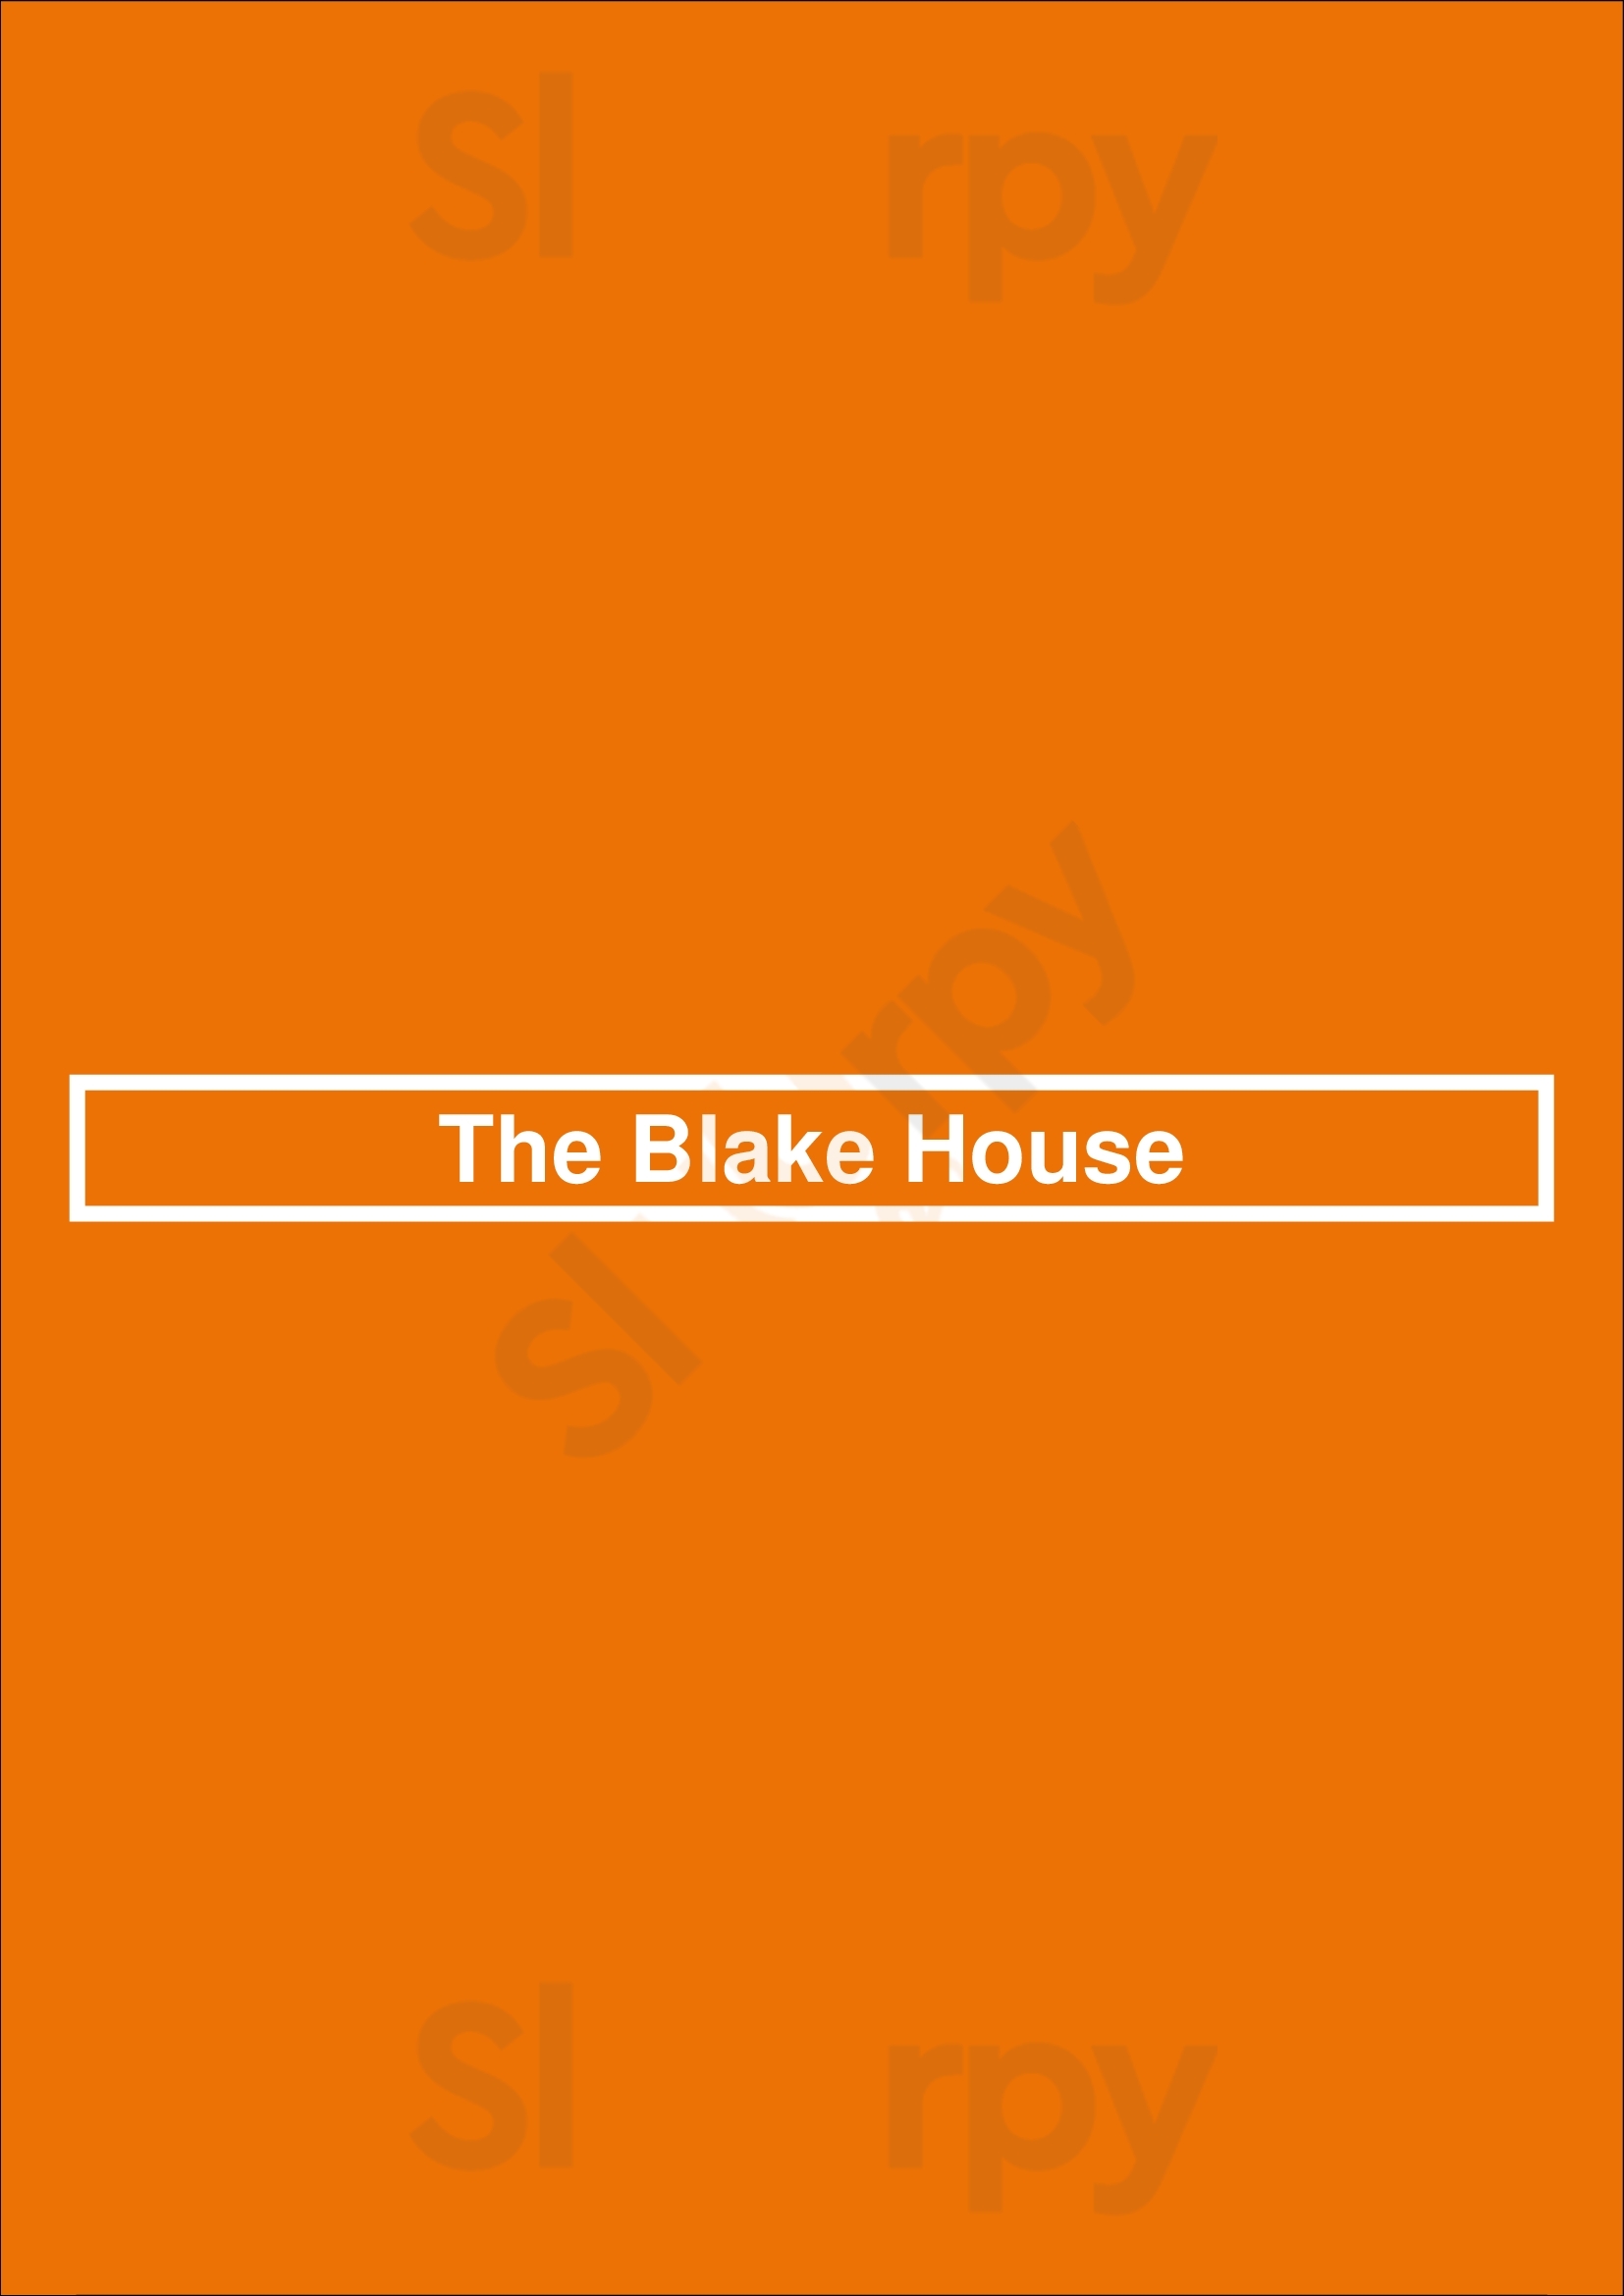 The Blake House Toronto Menu - 1